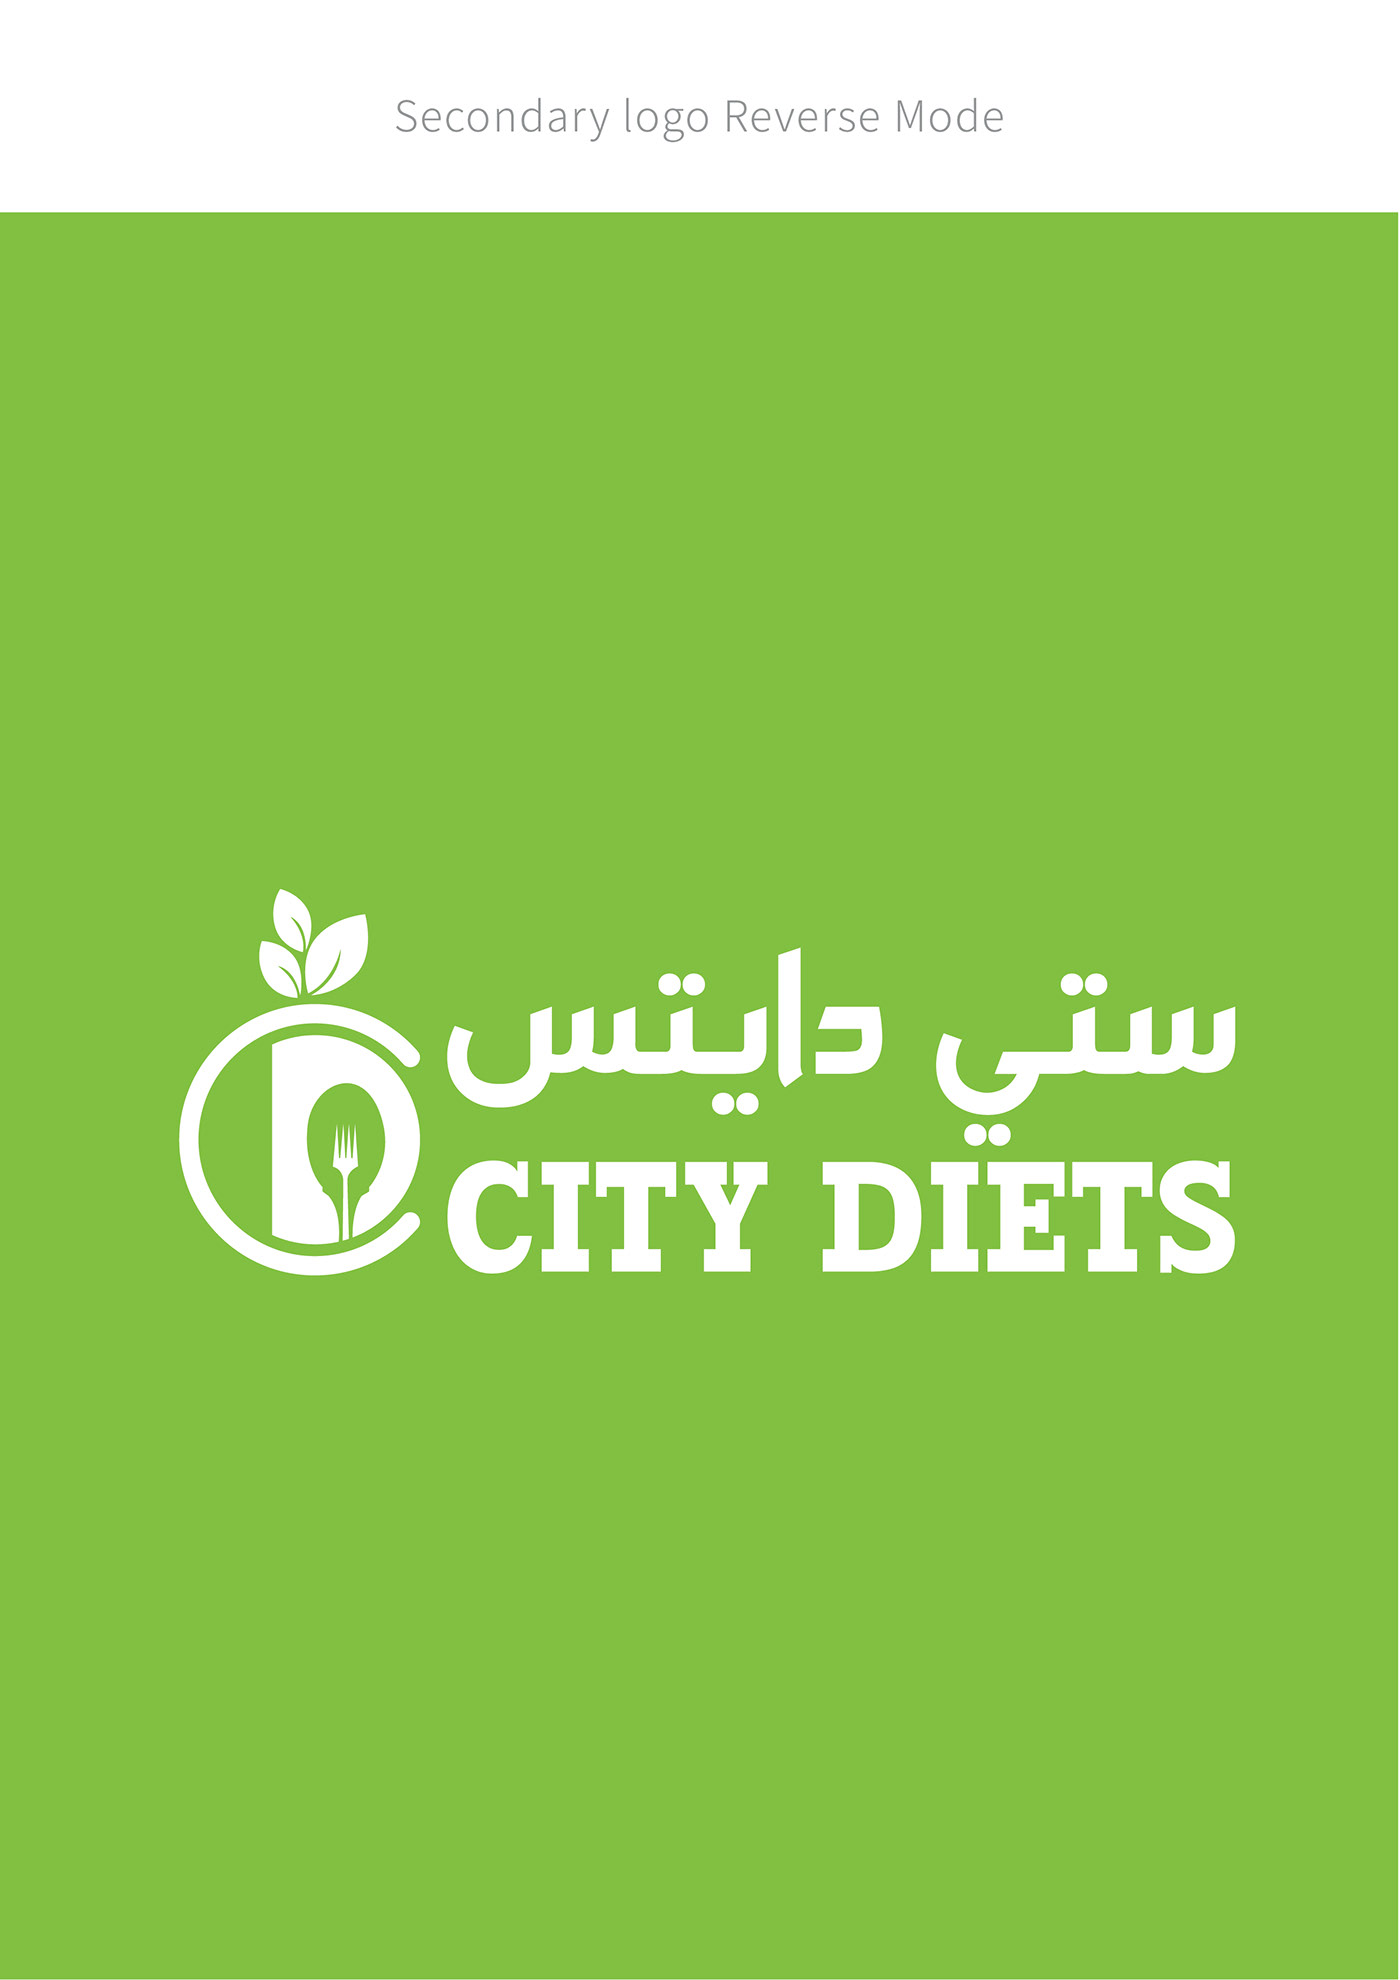 diets logo logo Logo presentation